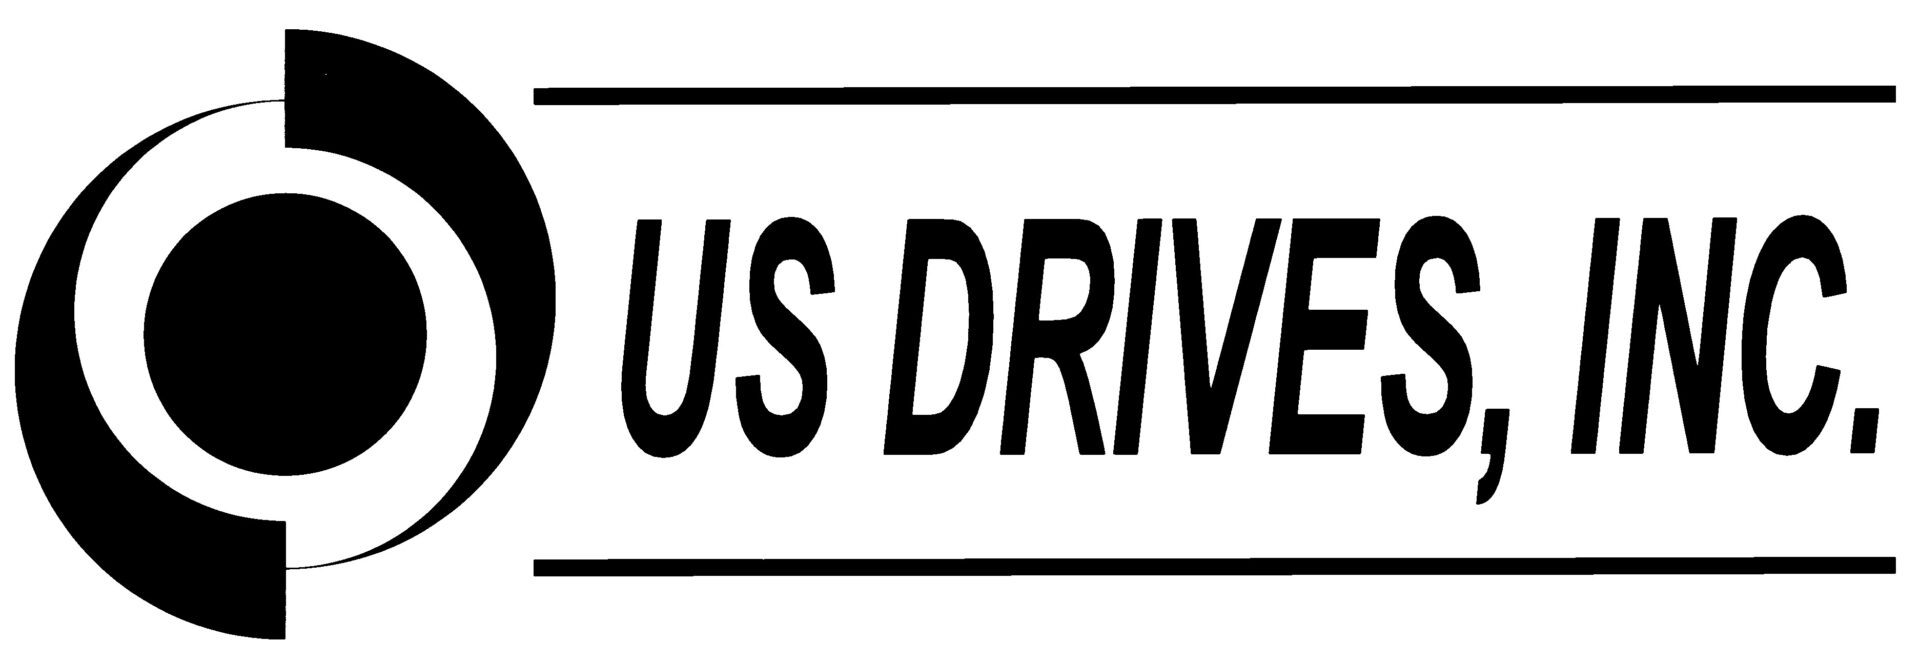 Us drives, inc logo.